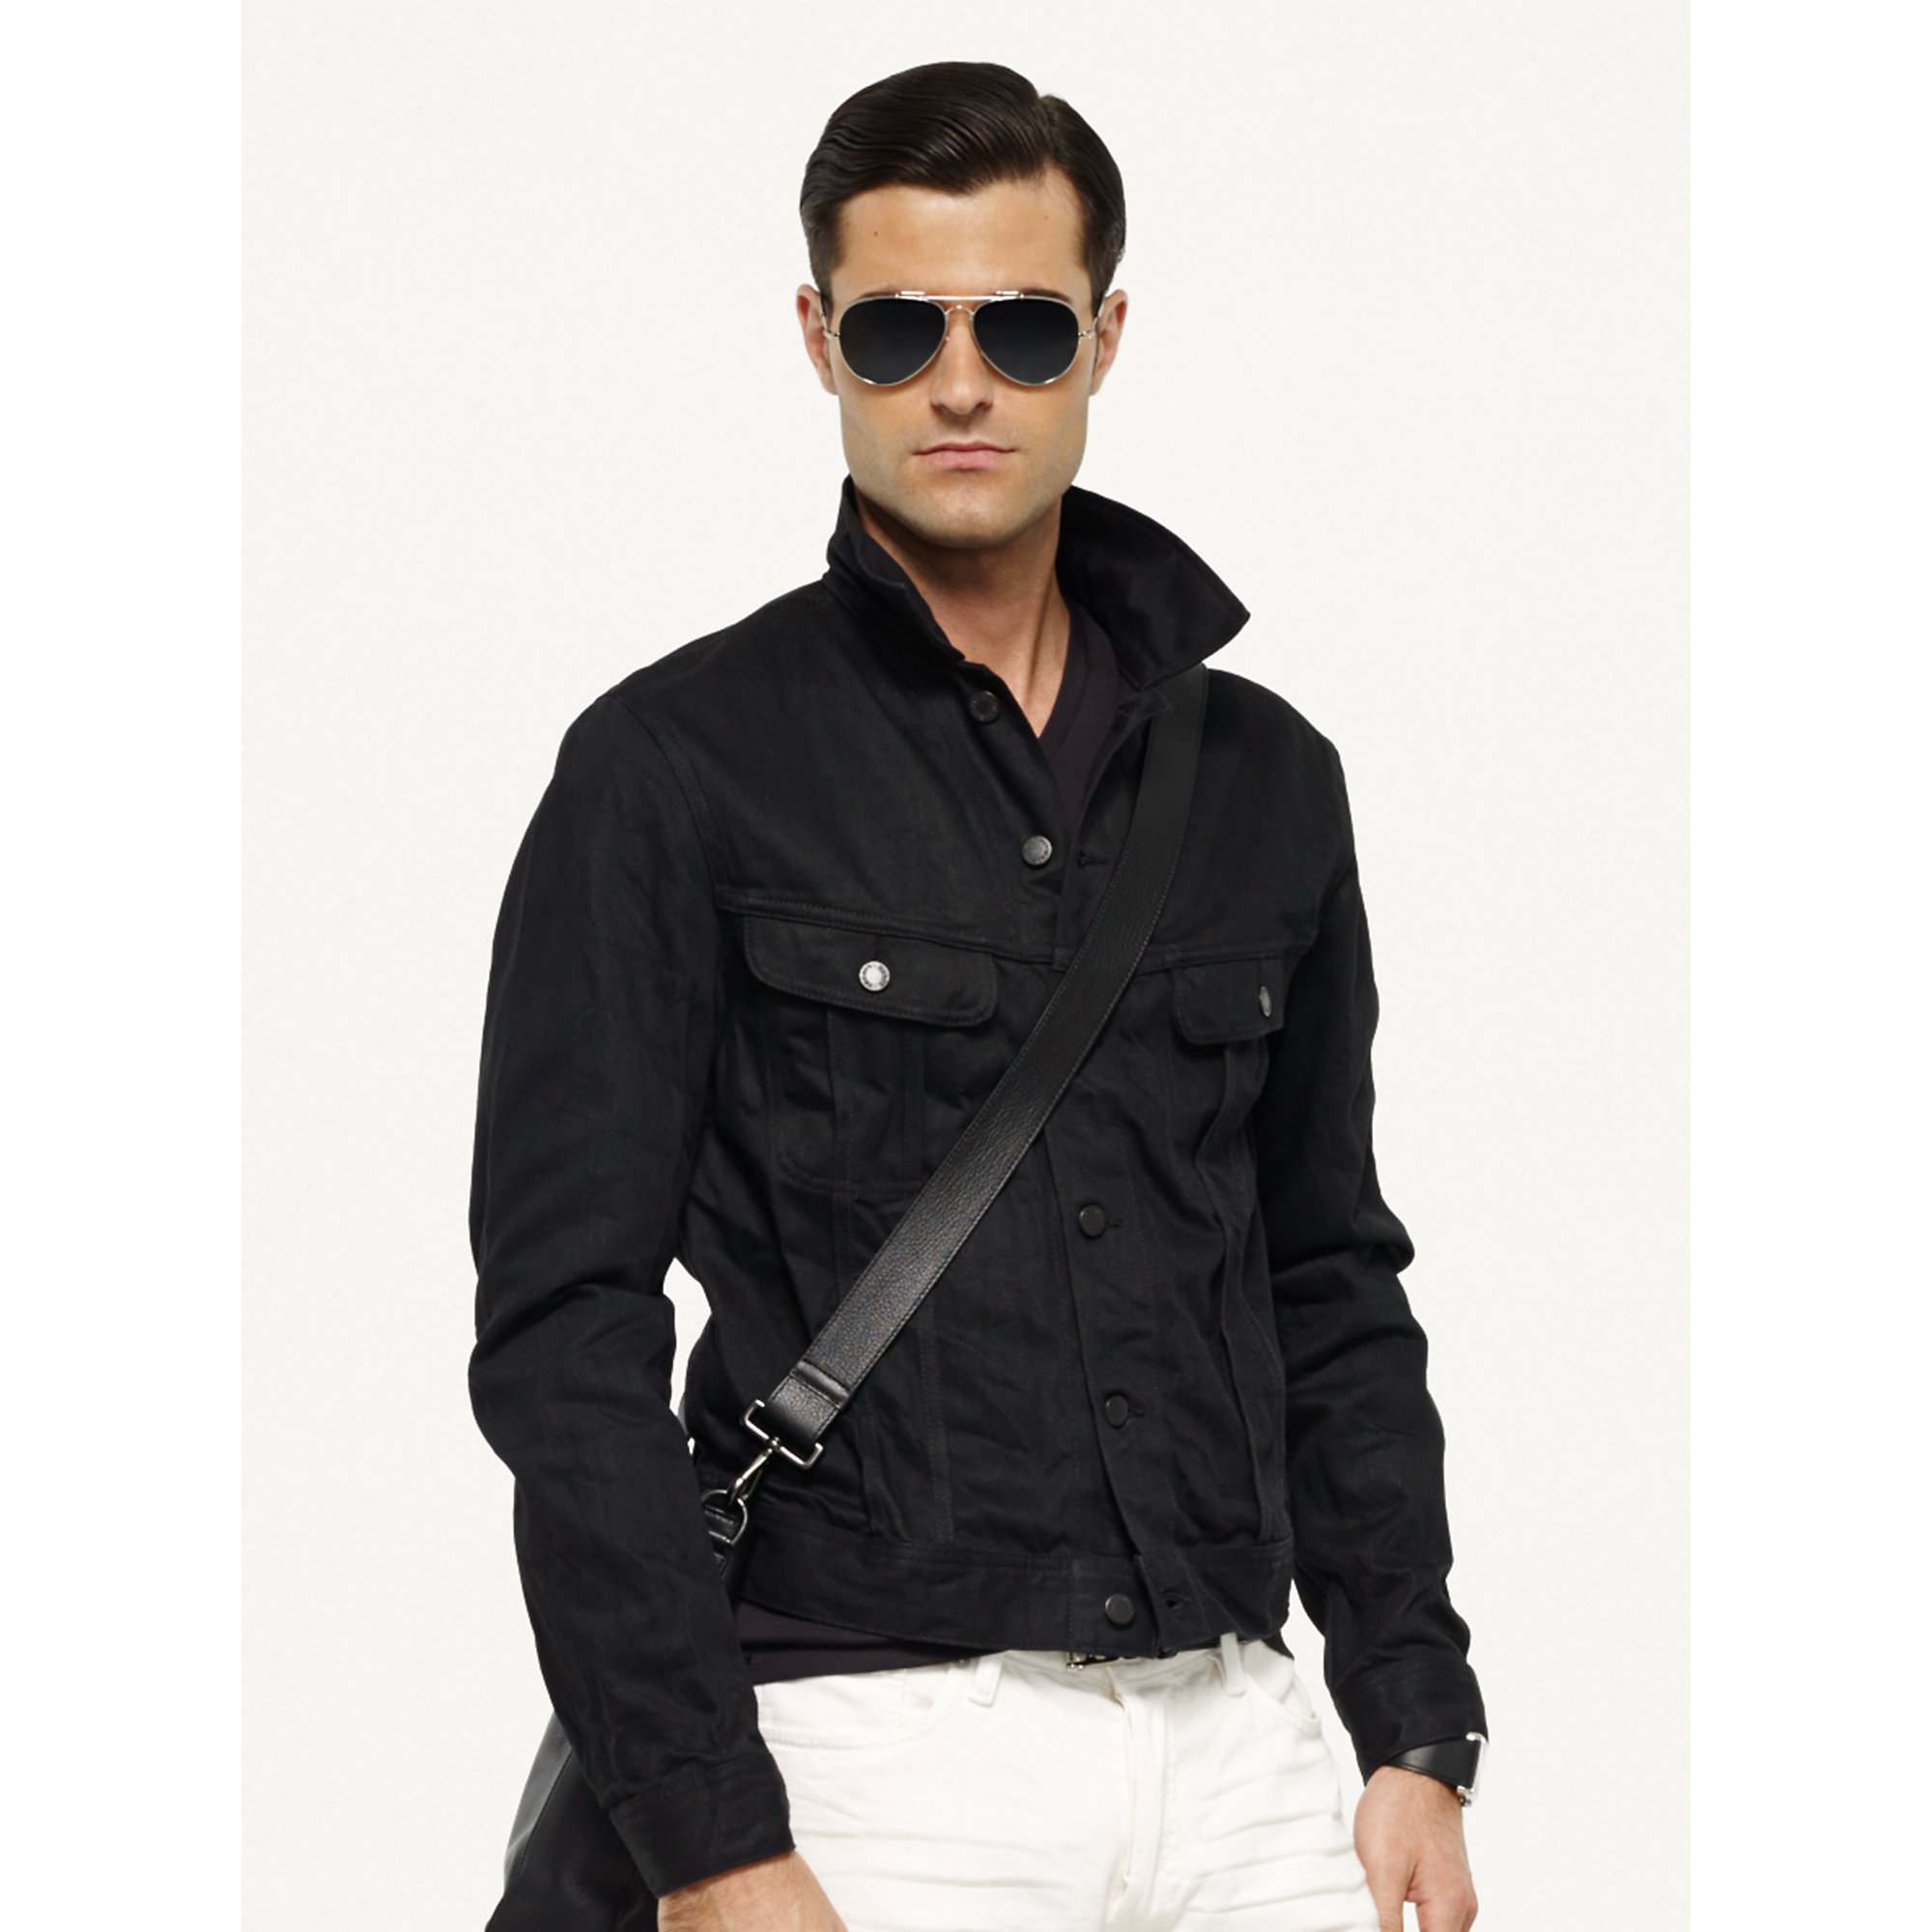 Ralph Lauren Black Label Mason Trucker Jacket in Black for Men - Lyst